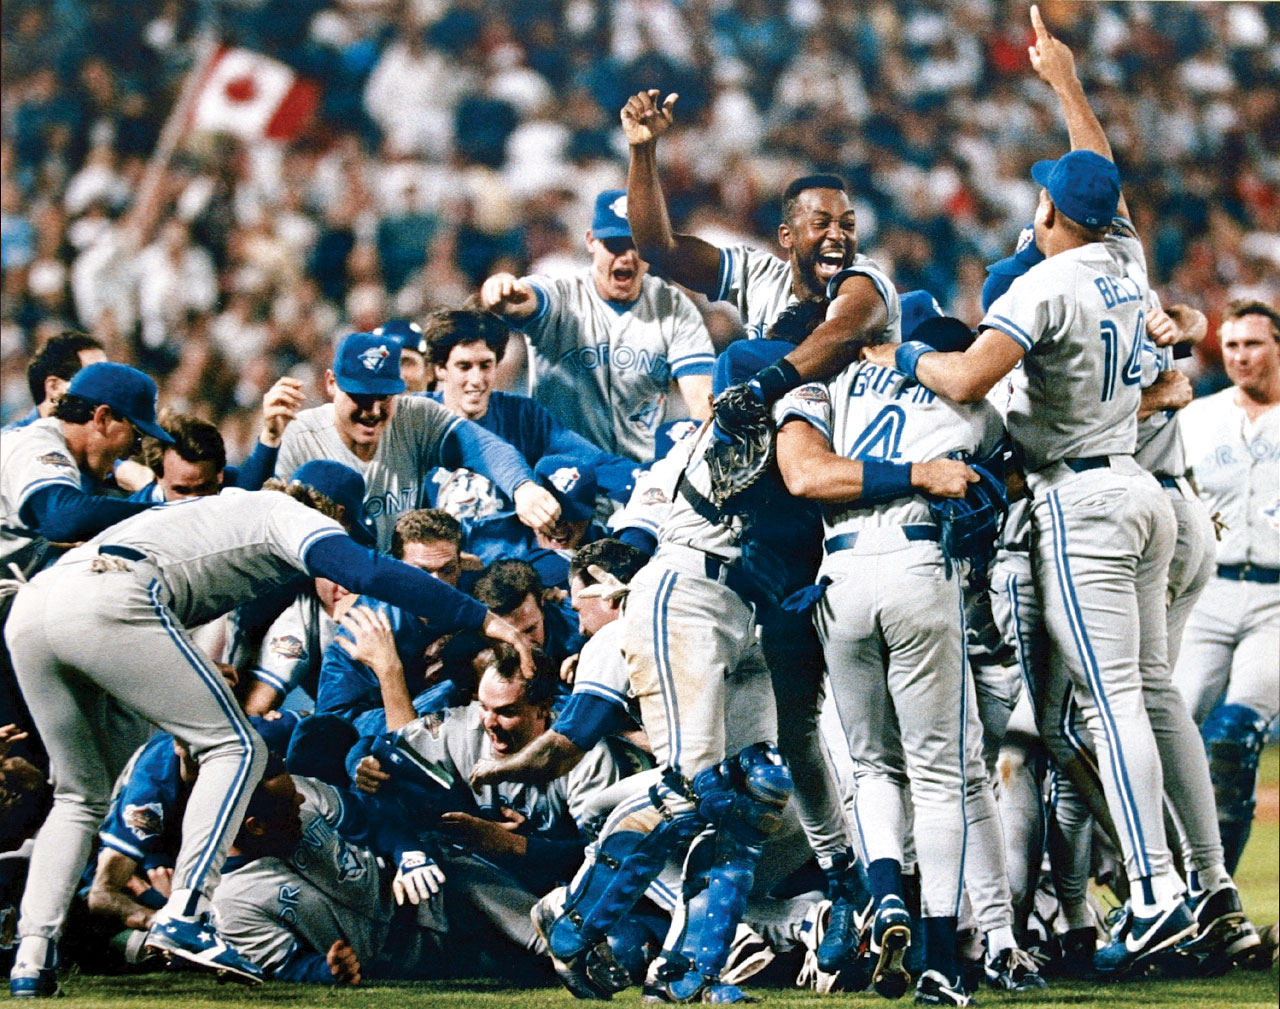 Blue Jays Memories of '93: The Season